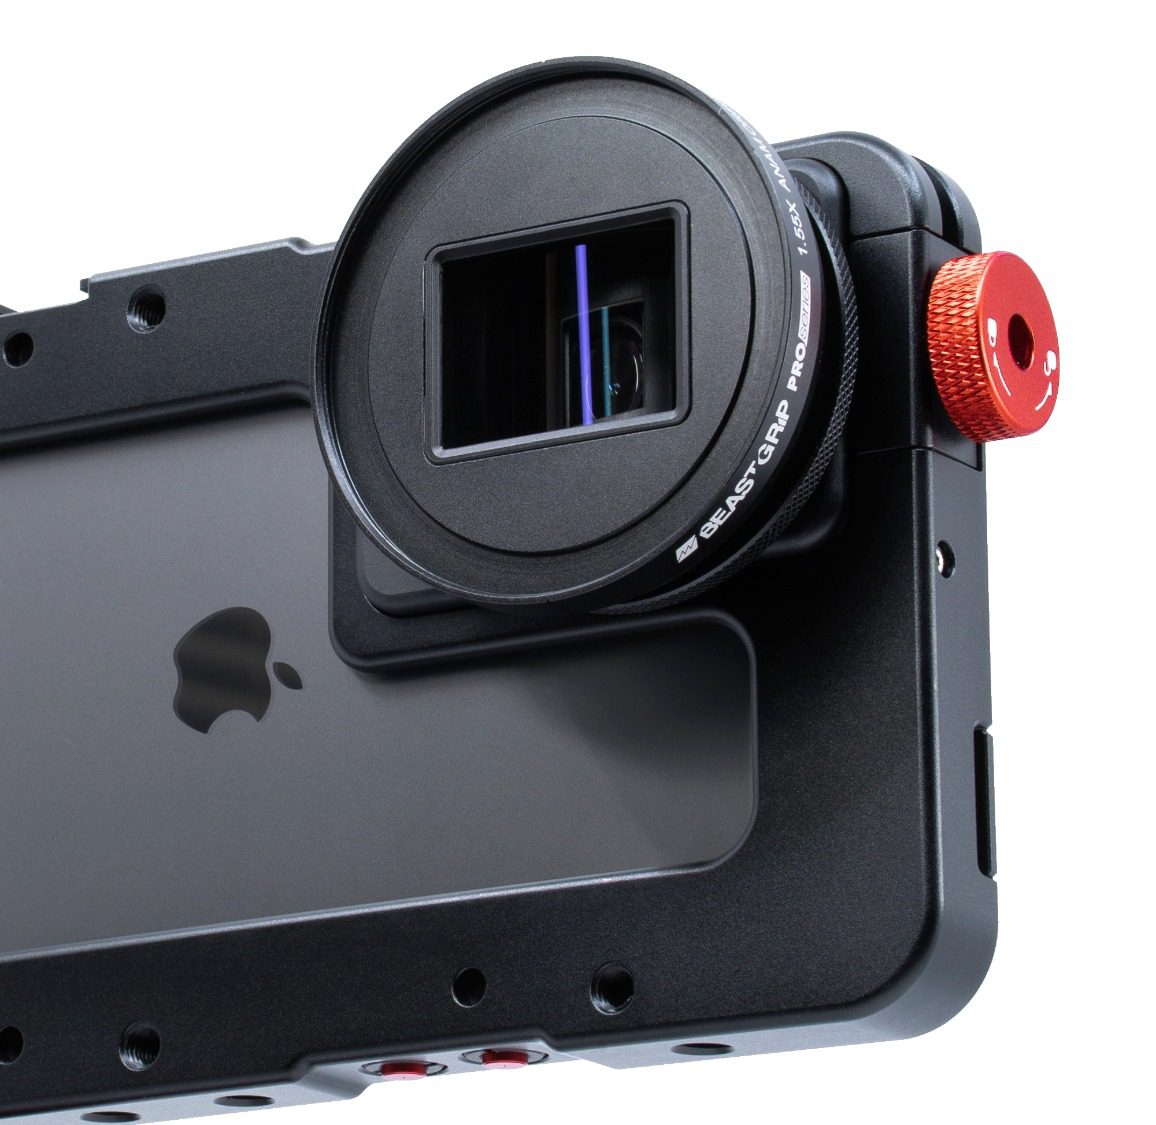 BeastGrip Pro Series - 1.55X Anamorphic Lens